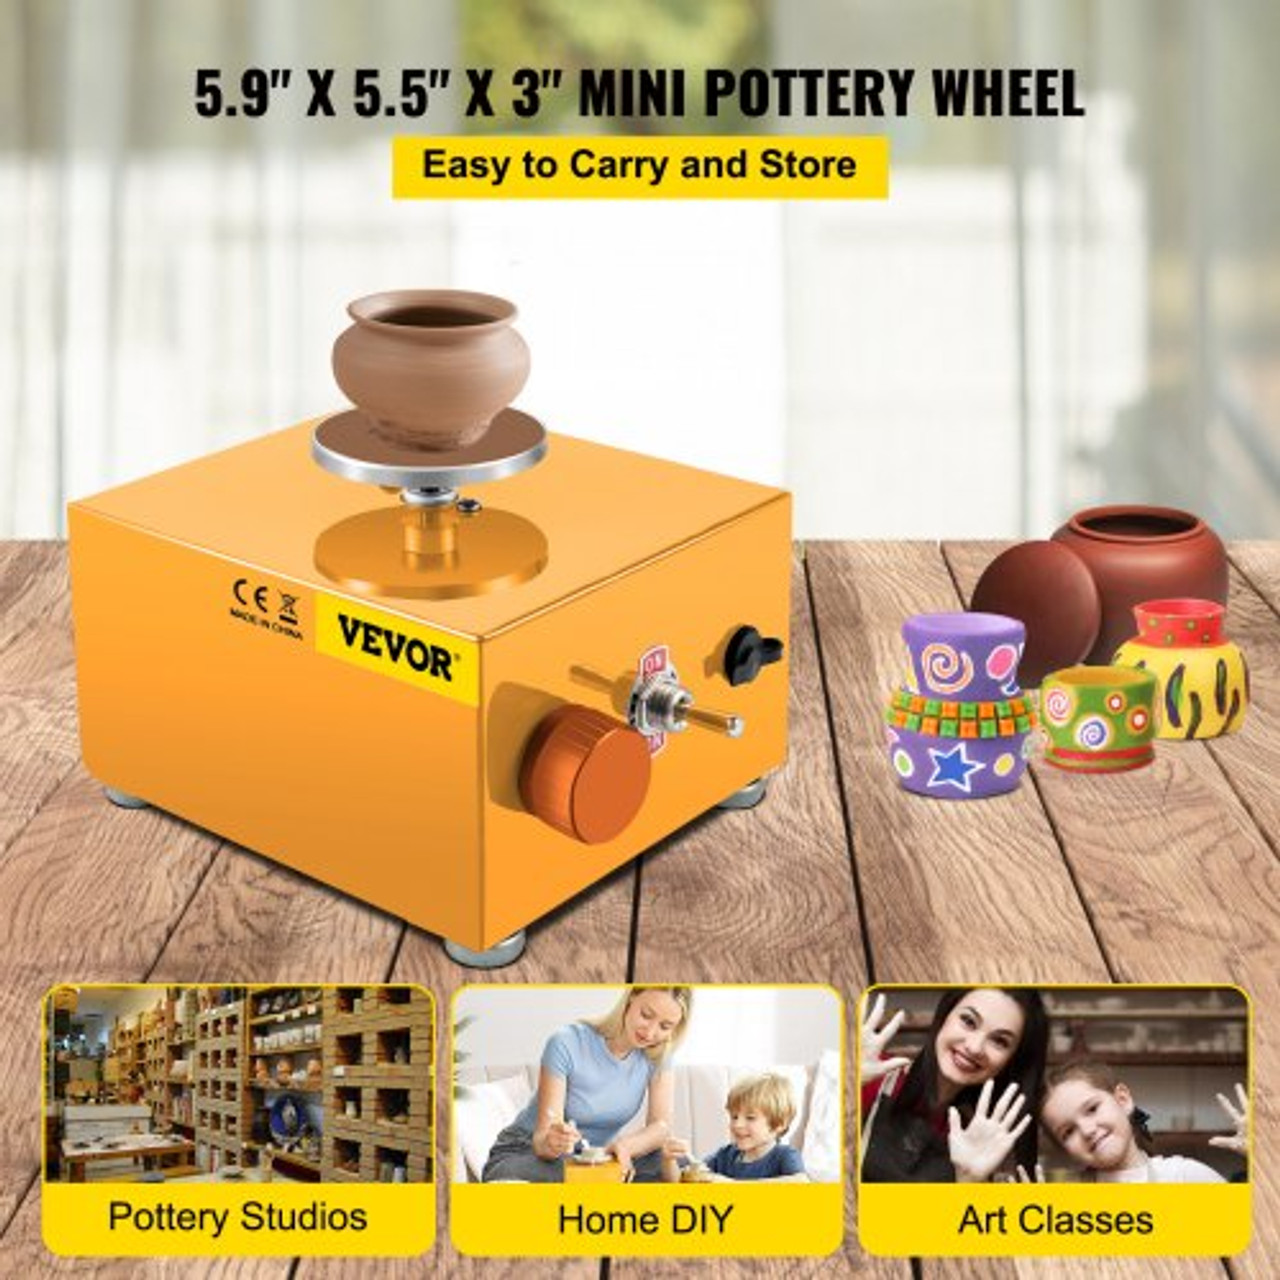 Pottery Wheel, Mini Electric Mini Pottery Wheel, for DIY Art Craft